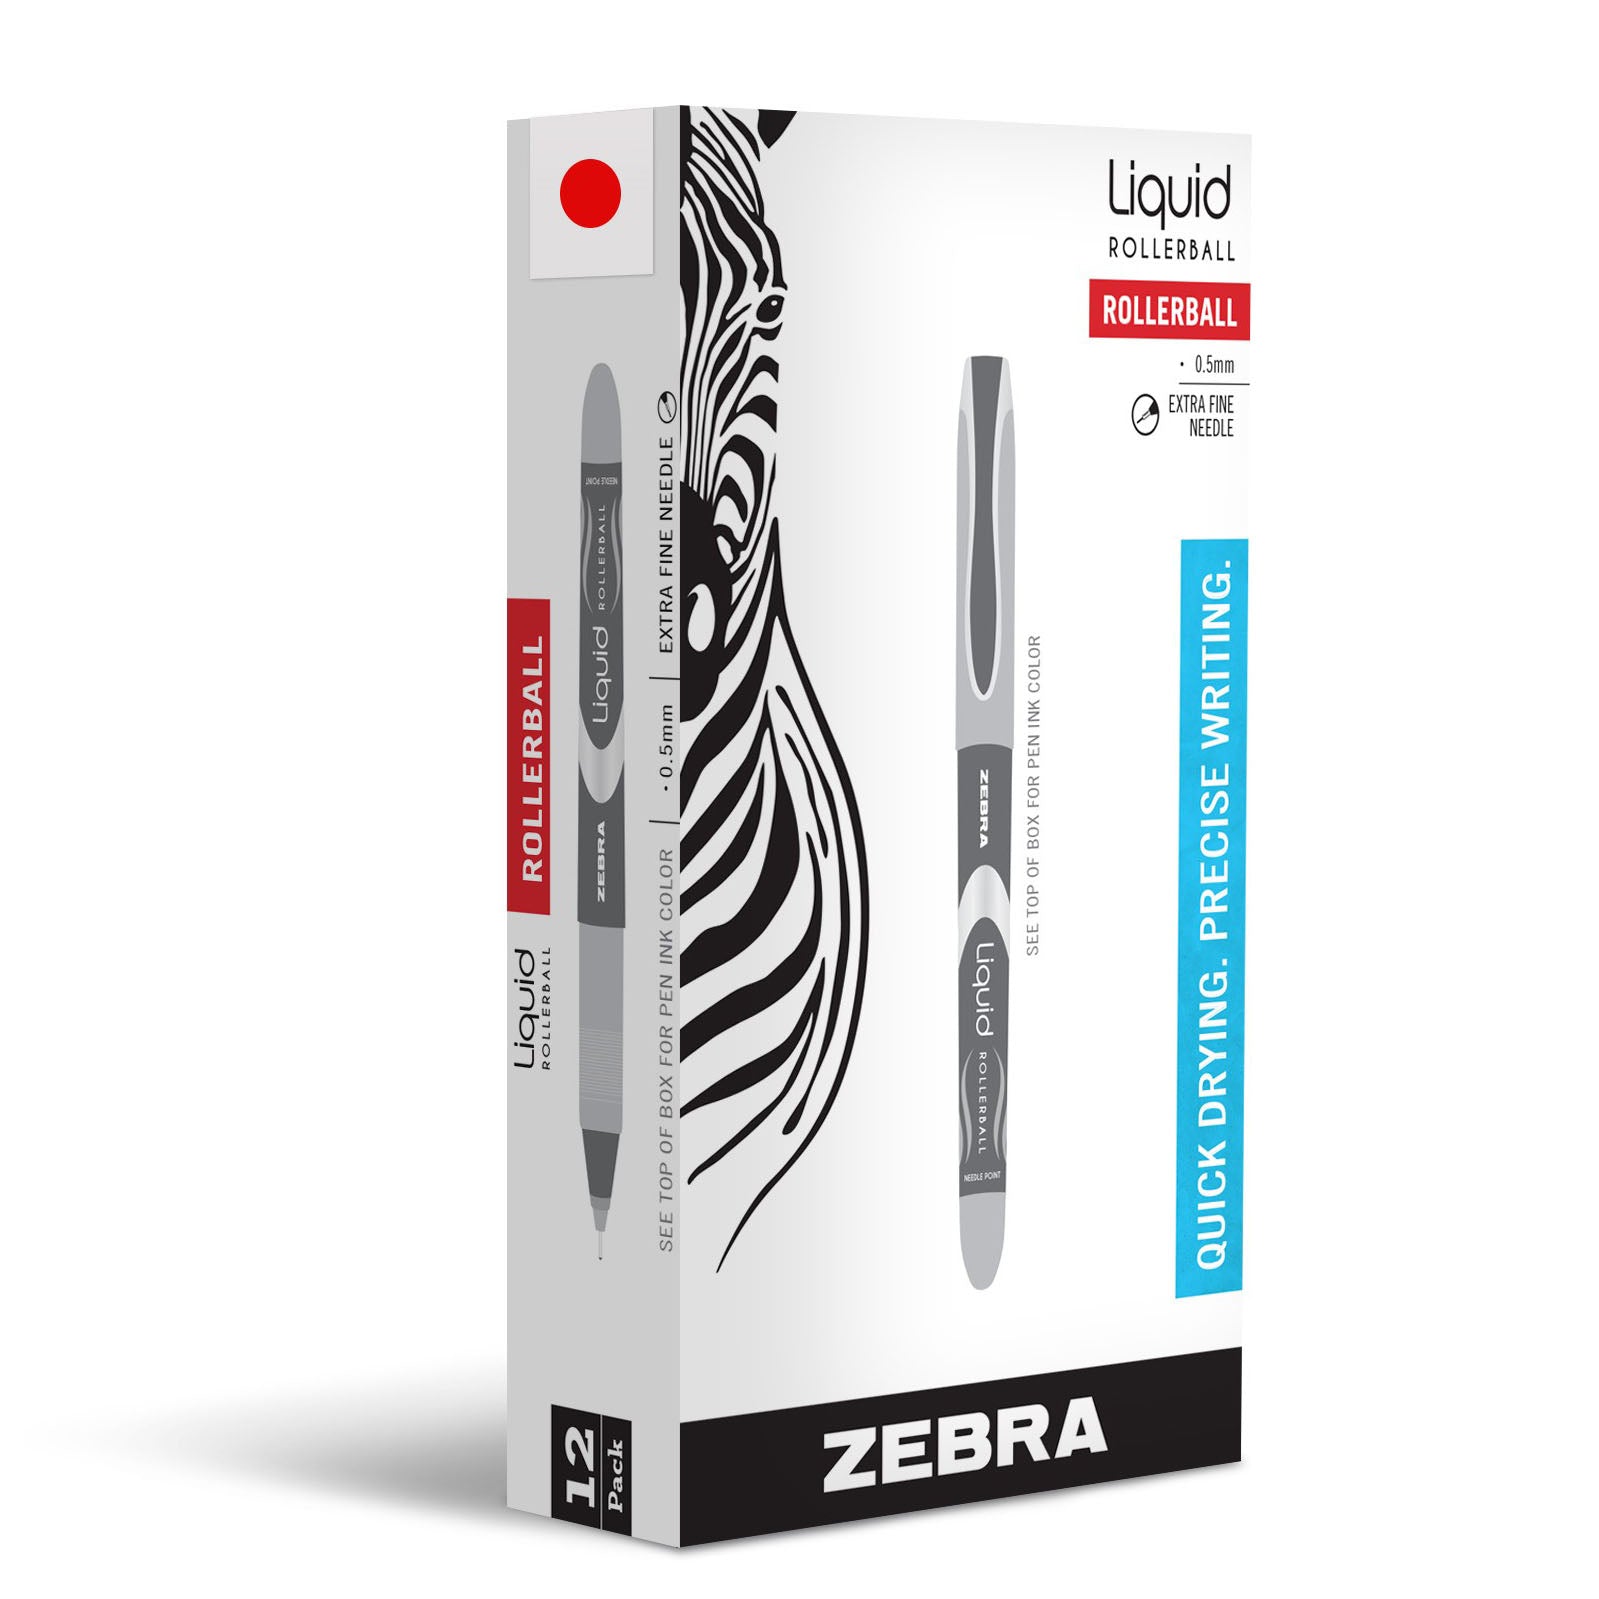 Zebra Liquid Rollerball Needle